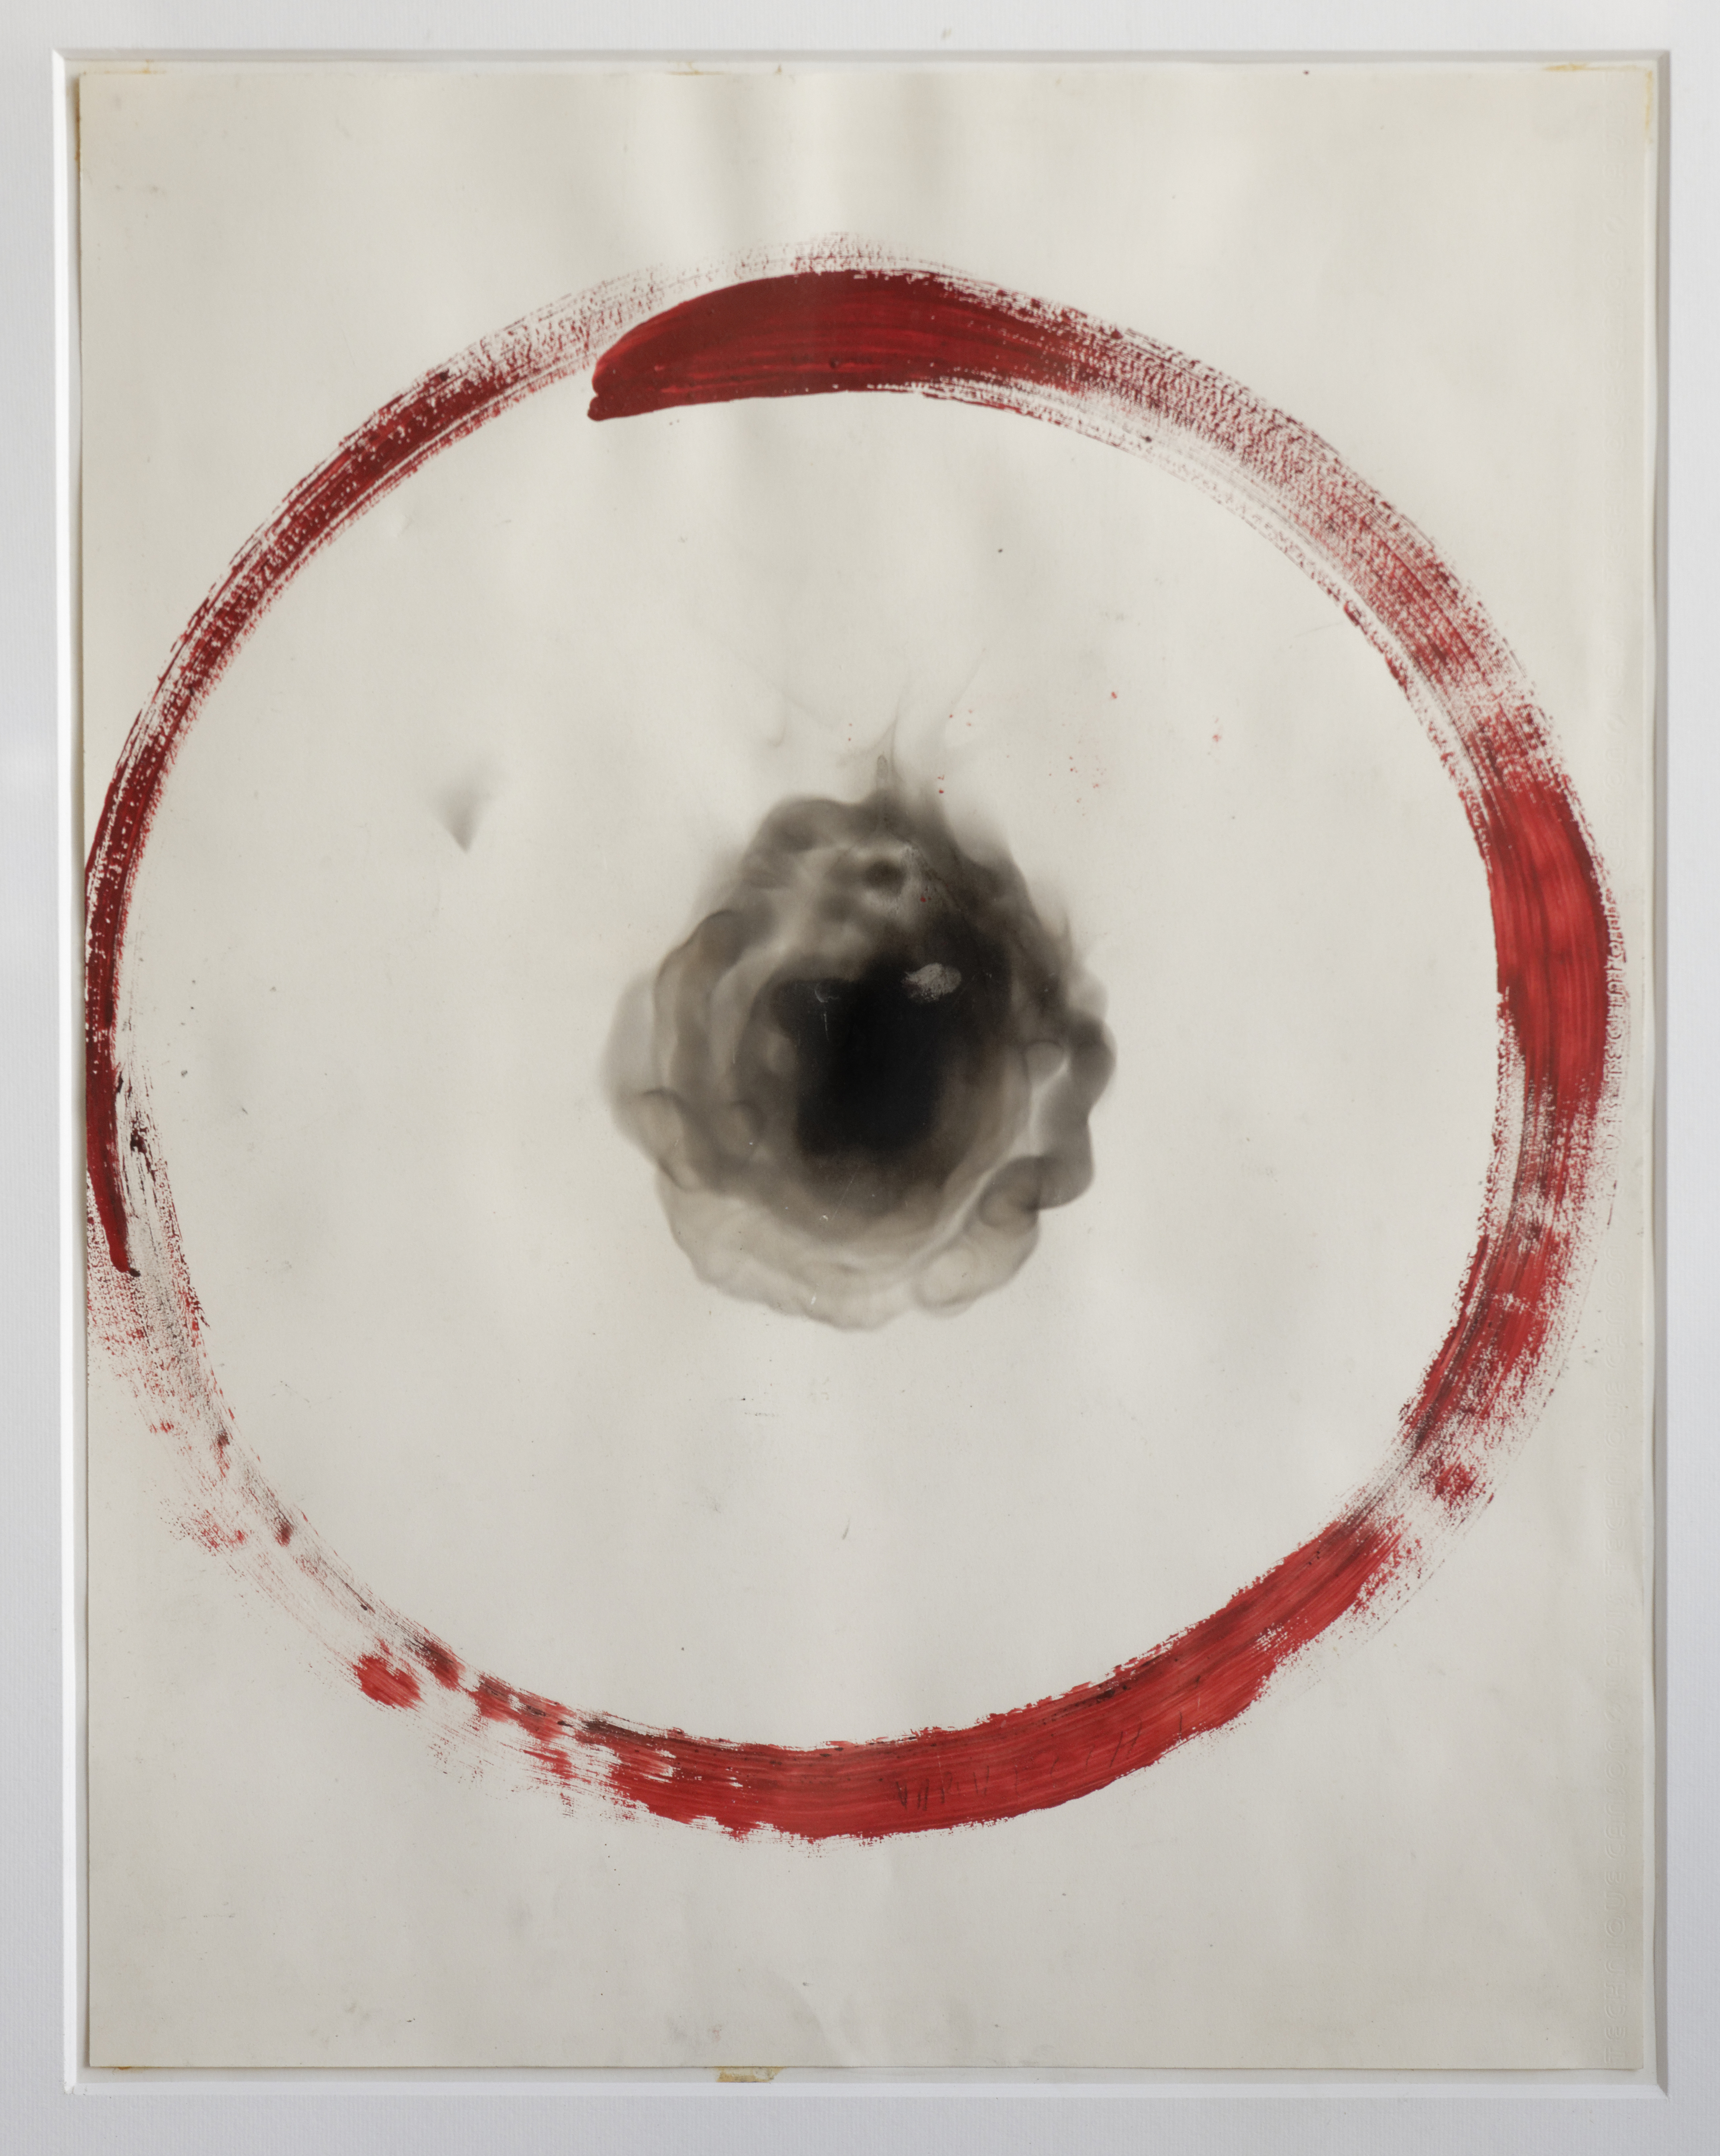 Jean-Paul Marcheschi, Cercle rouge, 1985 © Stephan Meyer